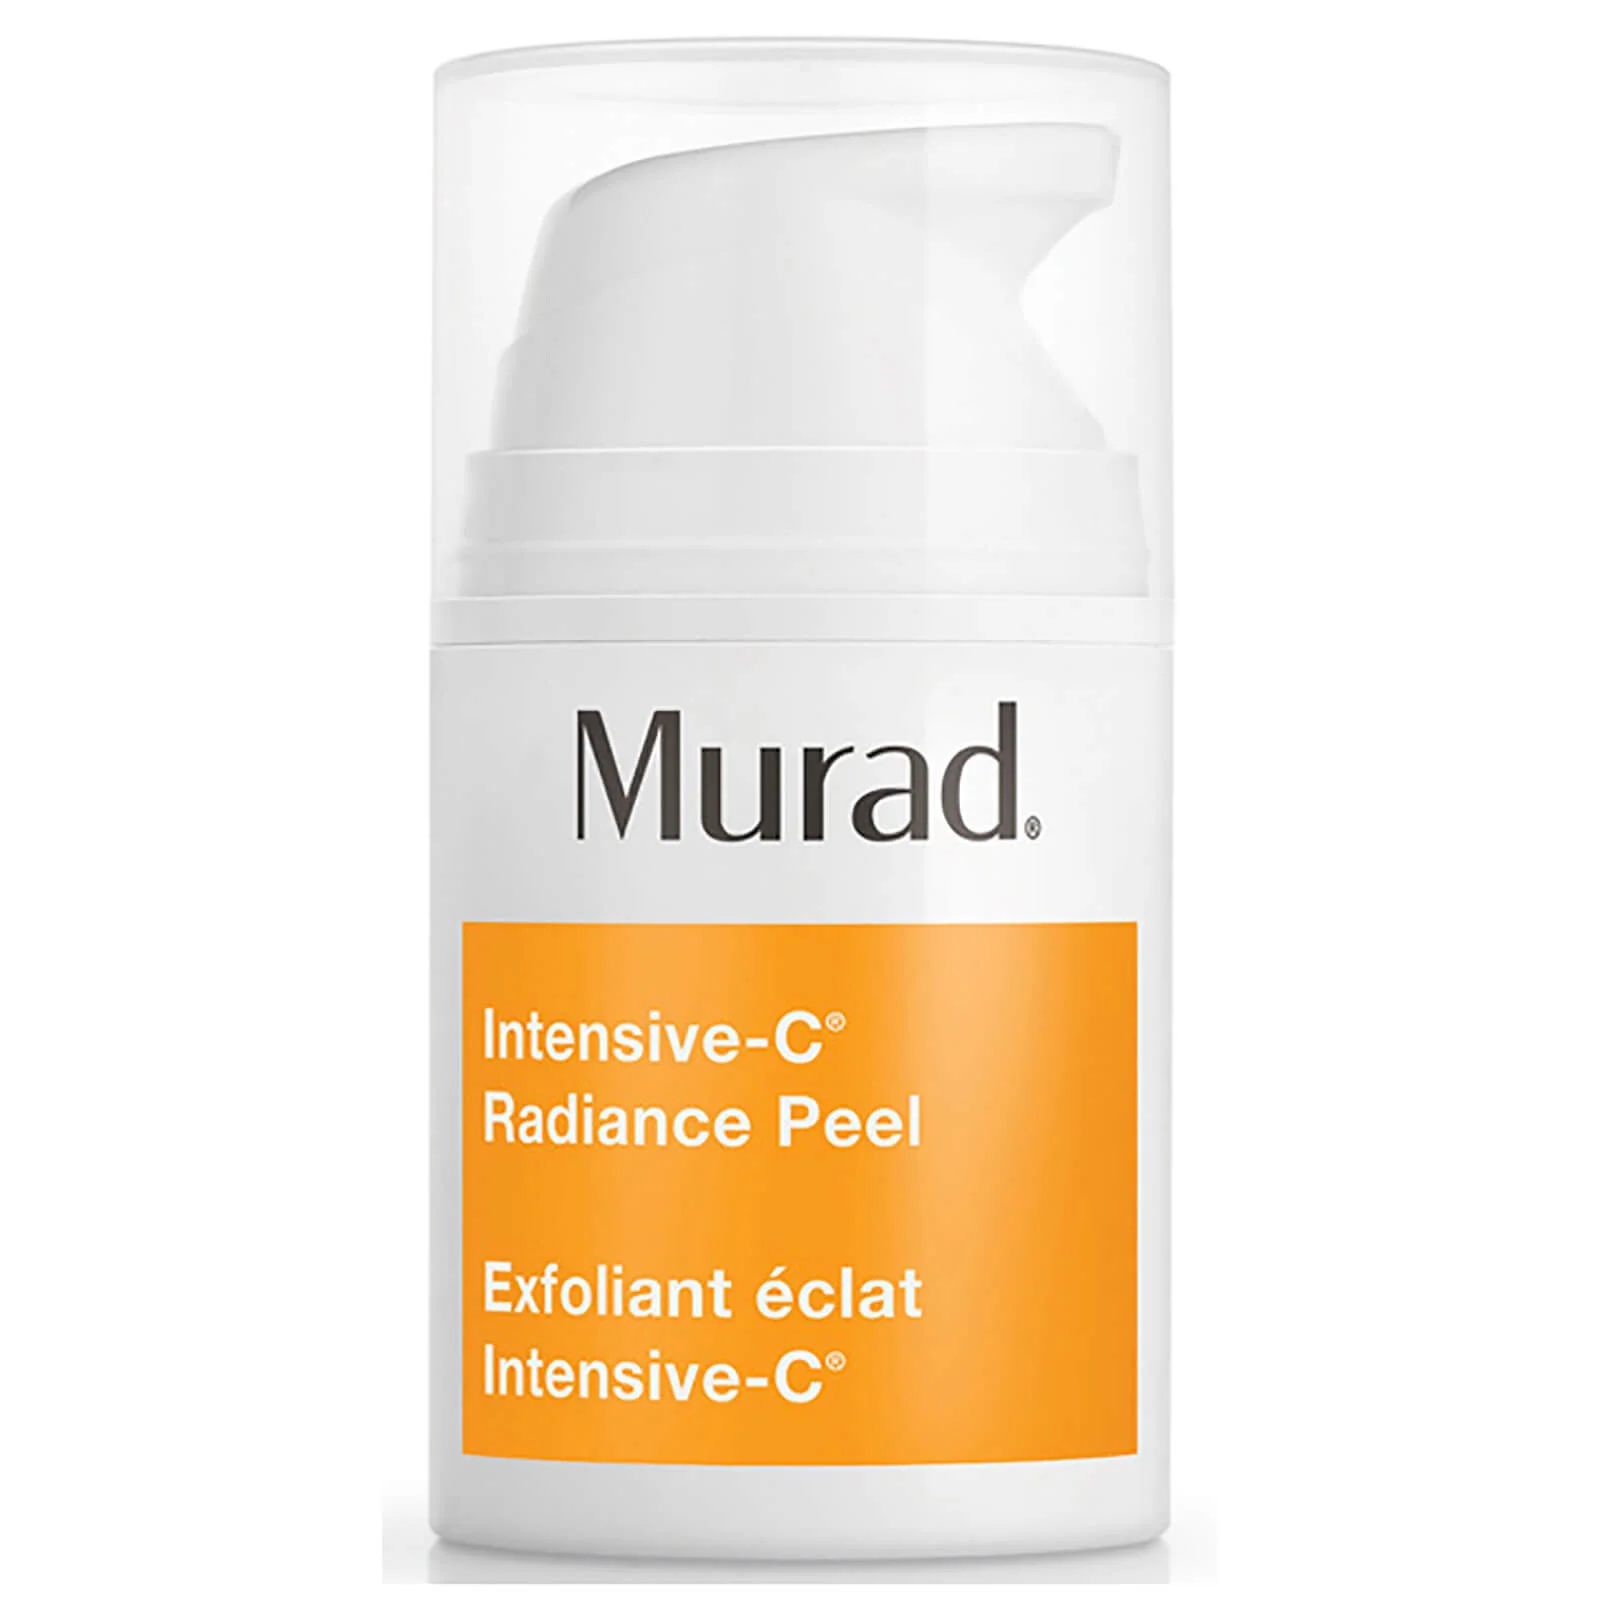 Murad Intensive-C Radiance Peel 50ml Image 1